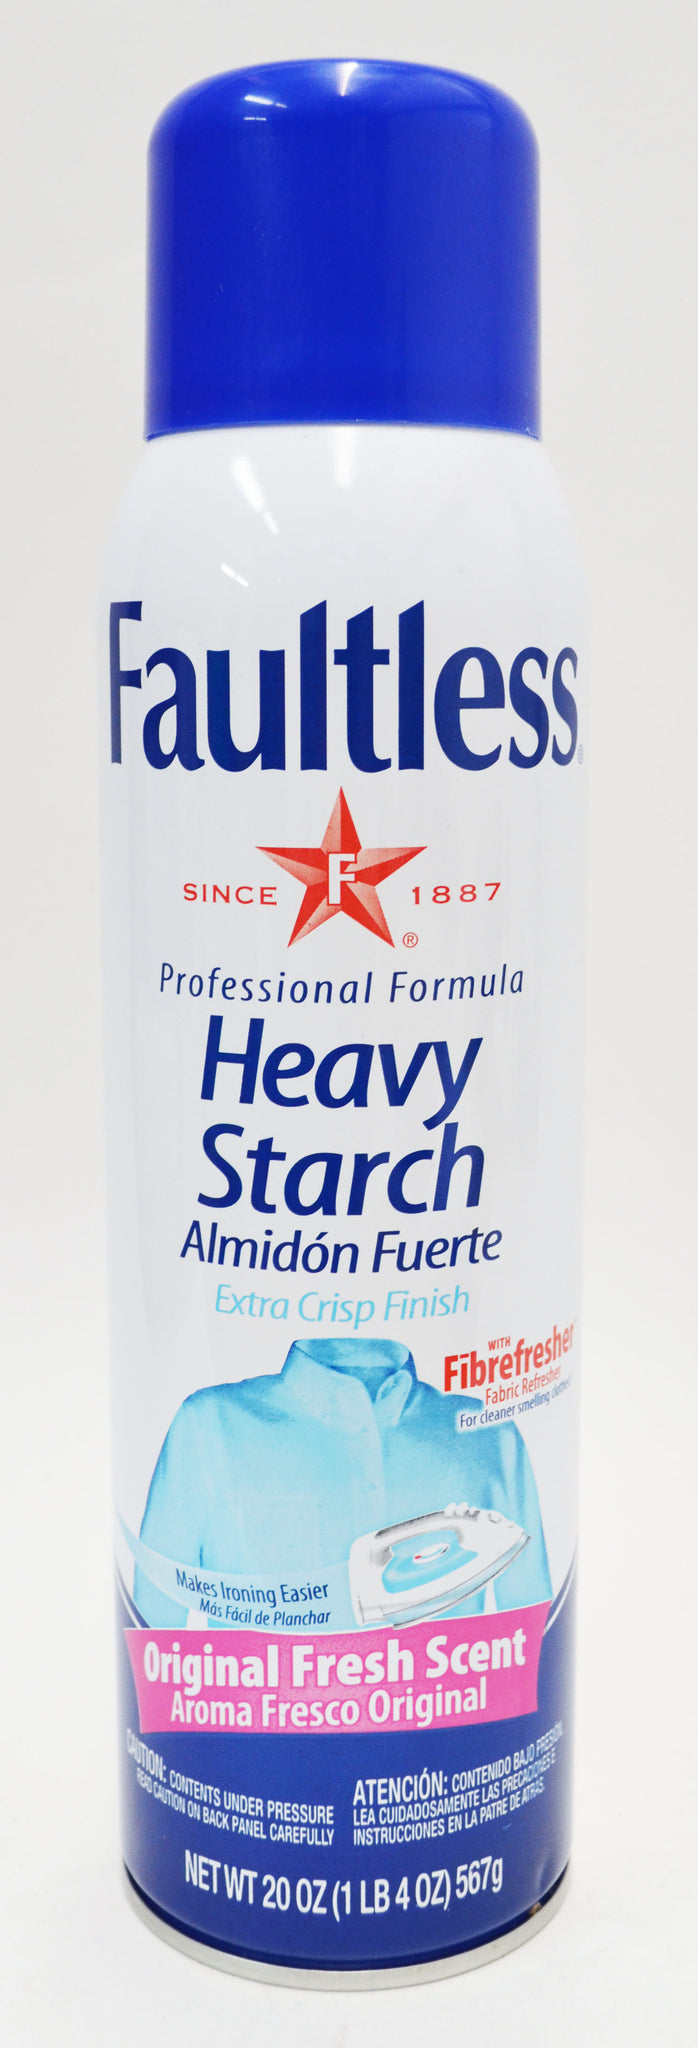 Faultless Heavy Starch - Original Scent